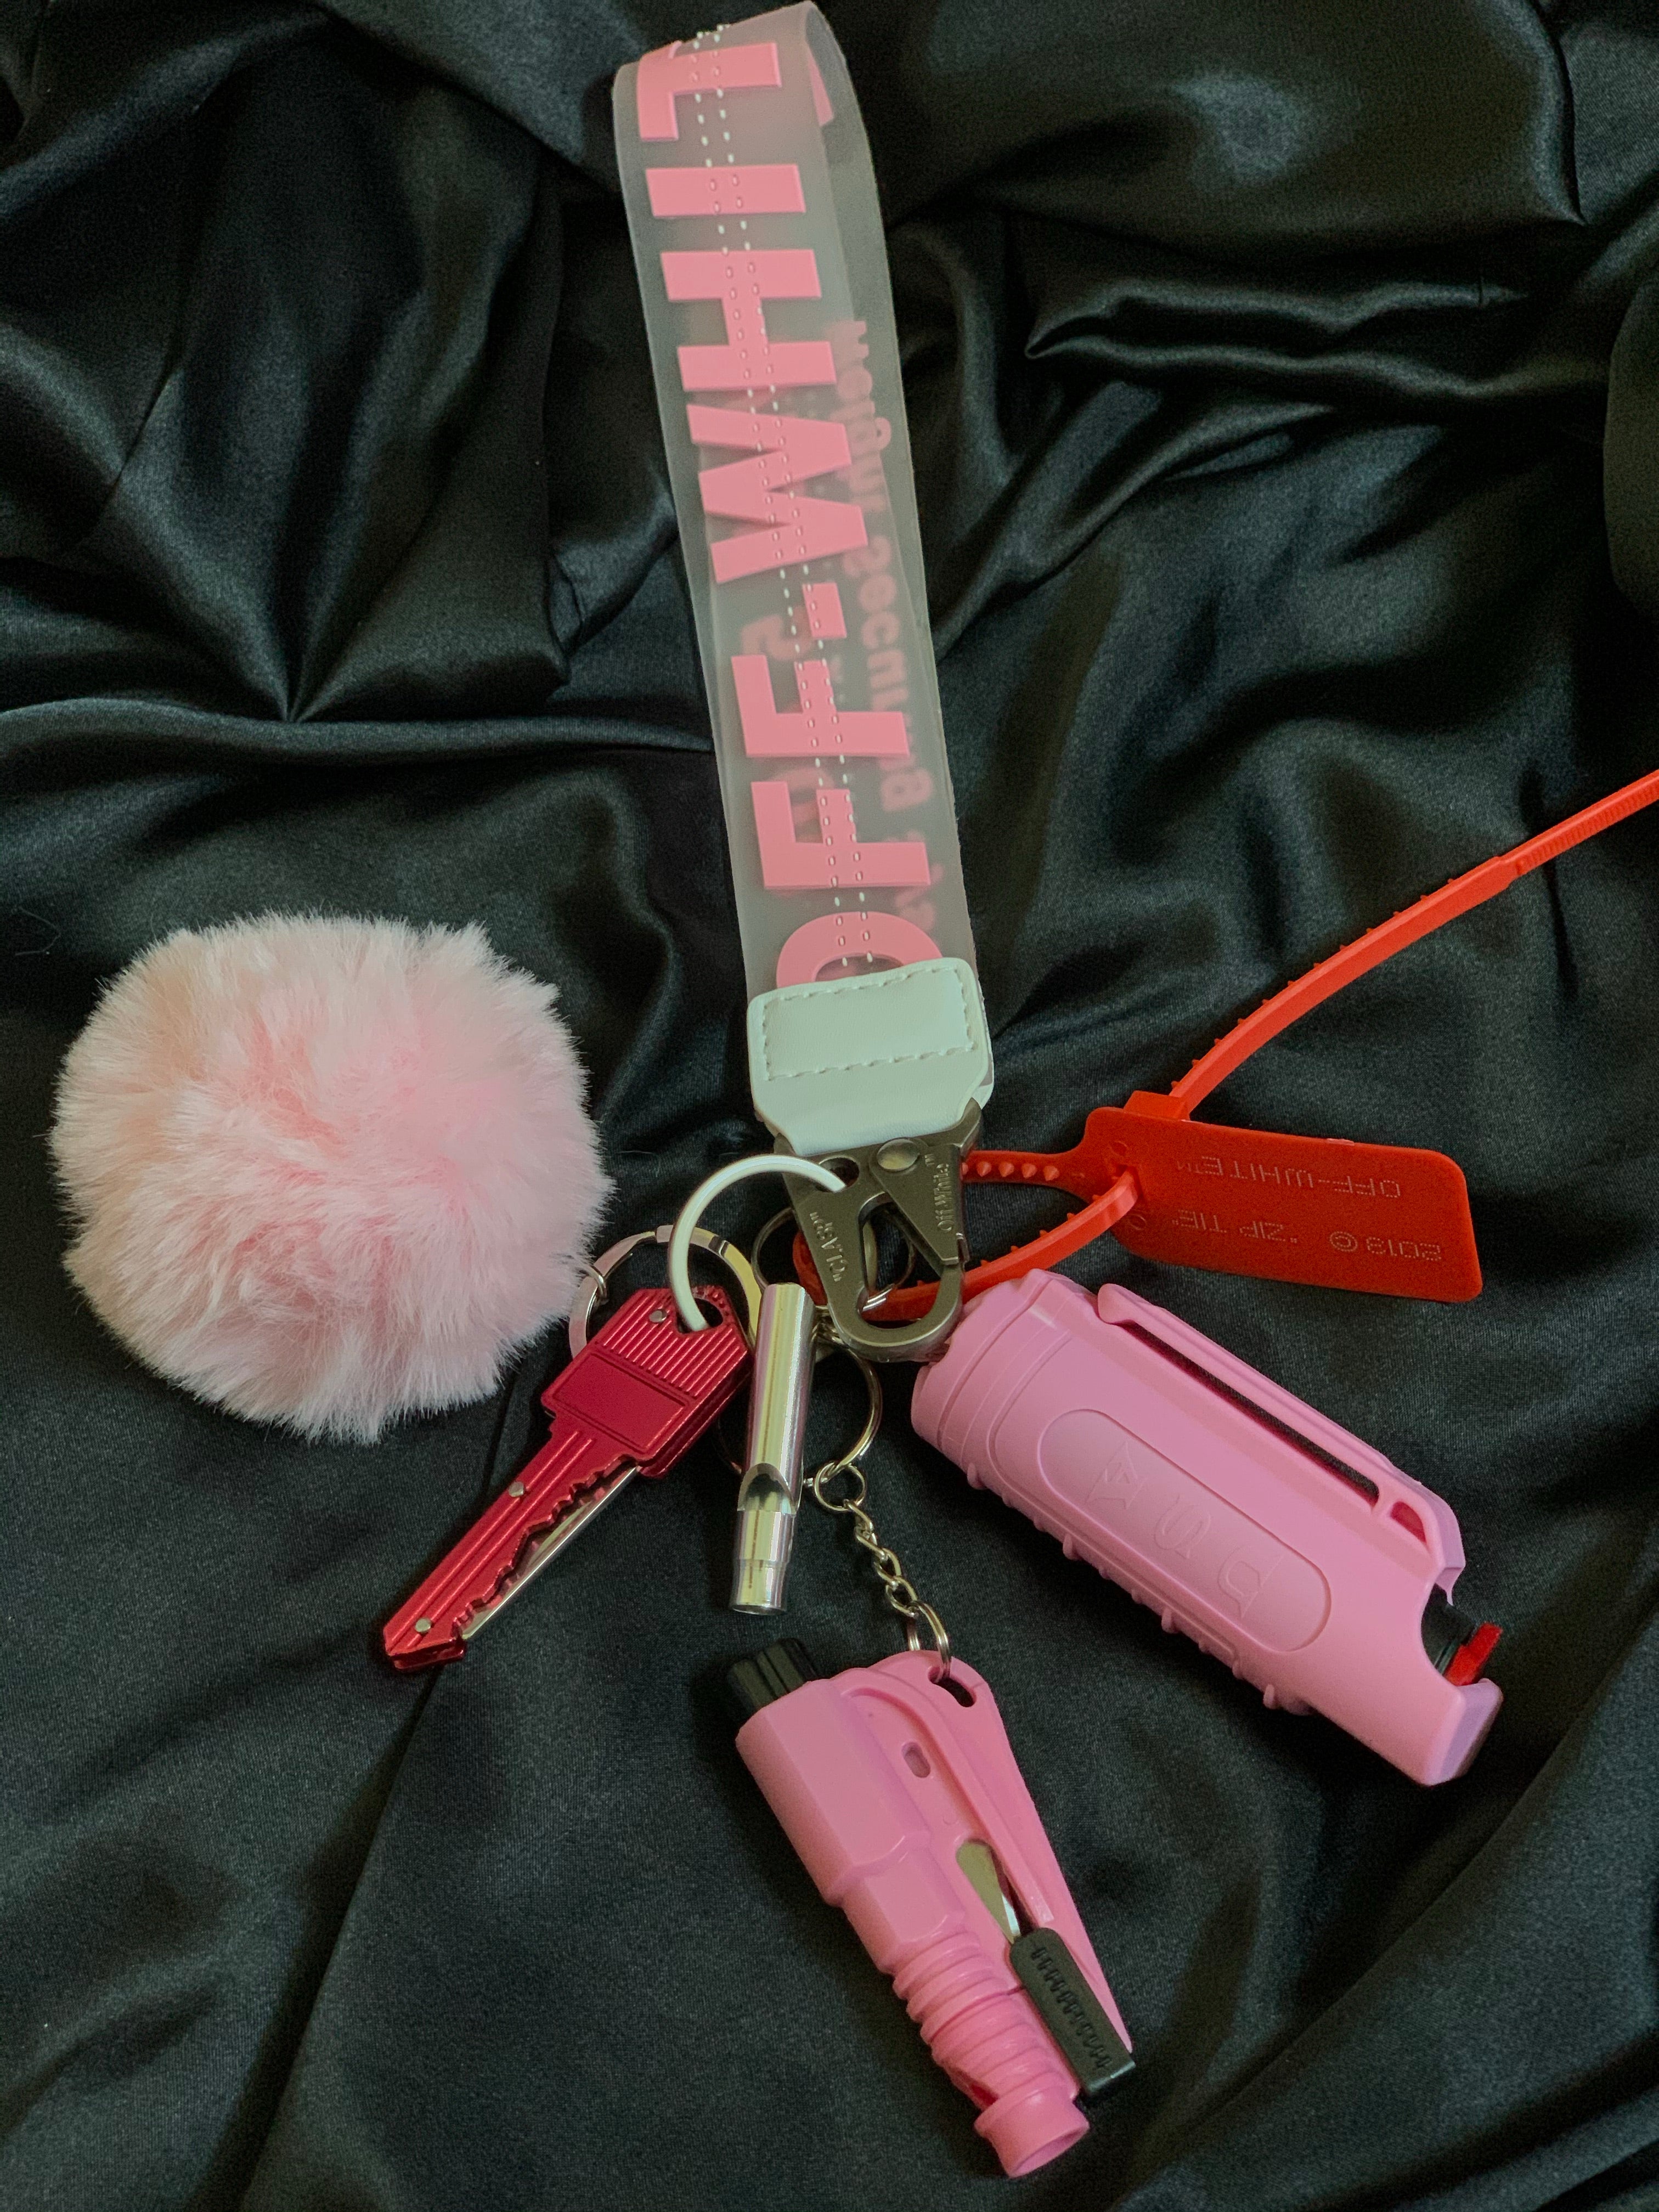 hot pink off white keychain